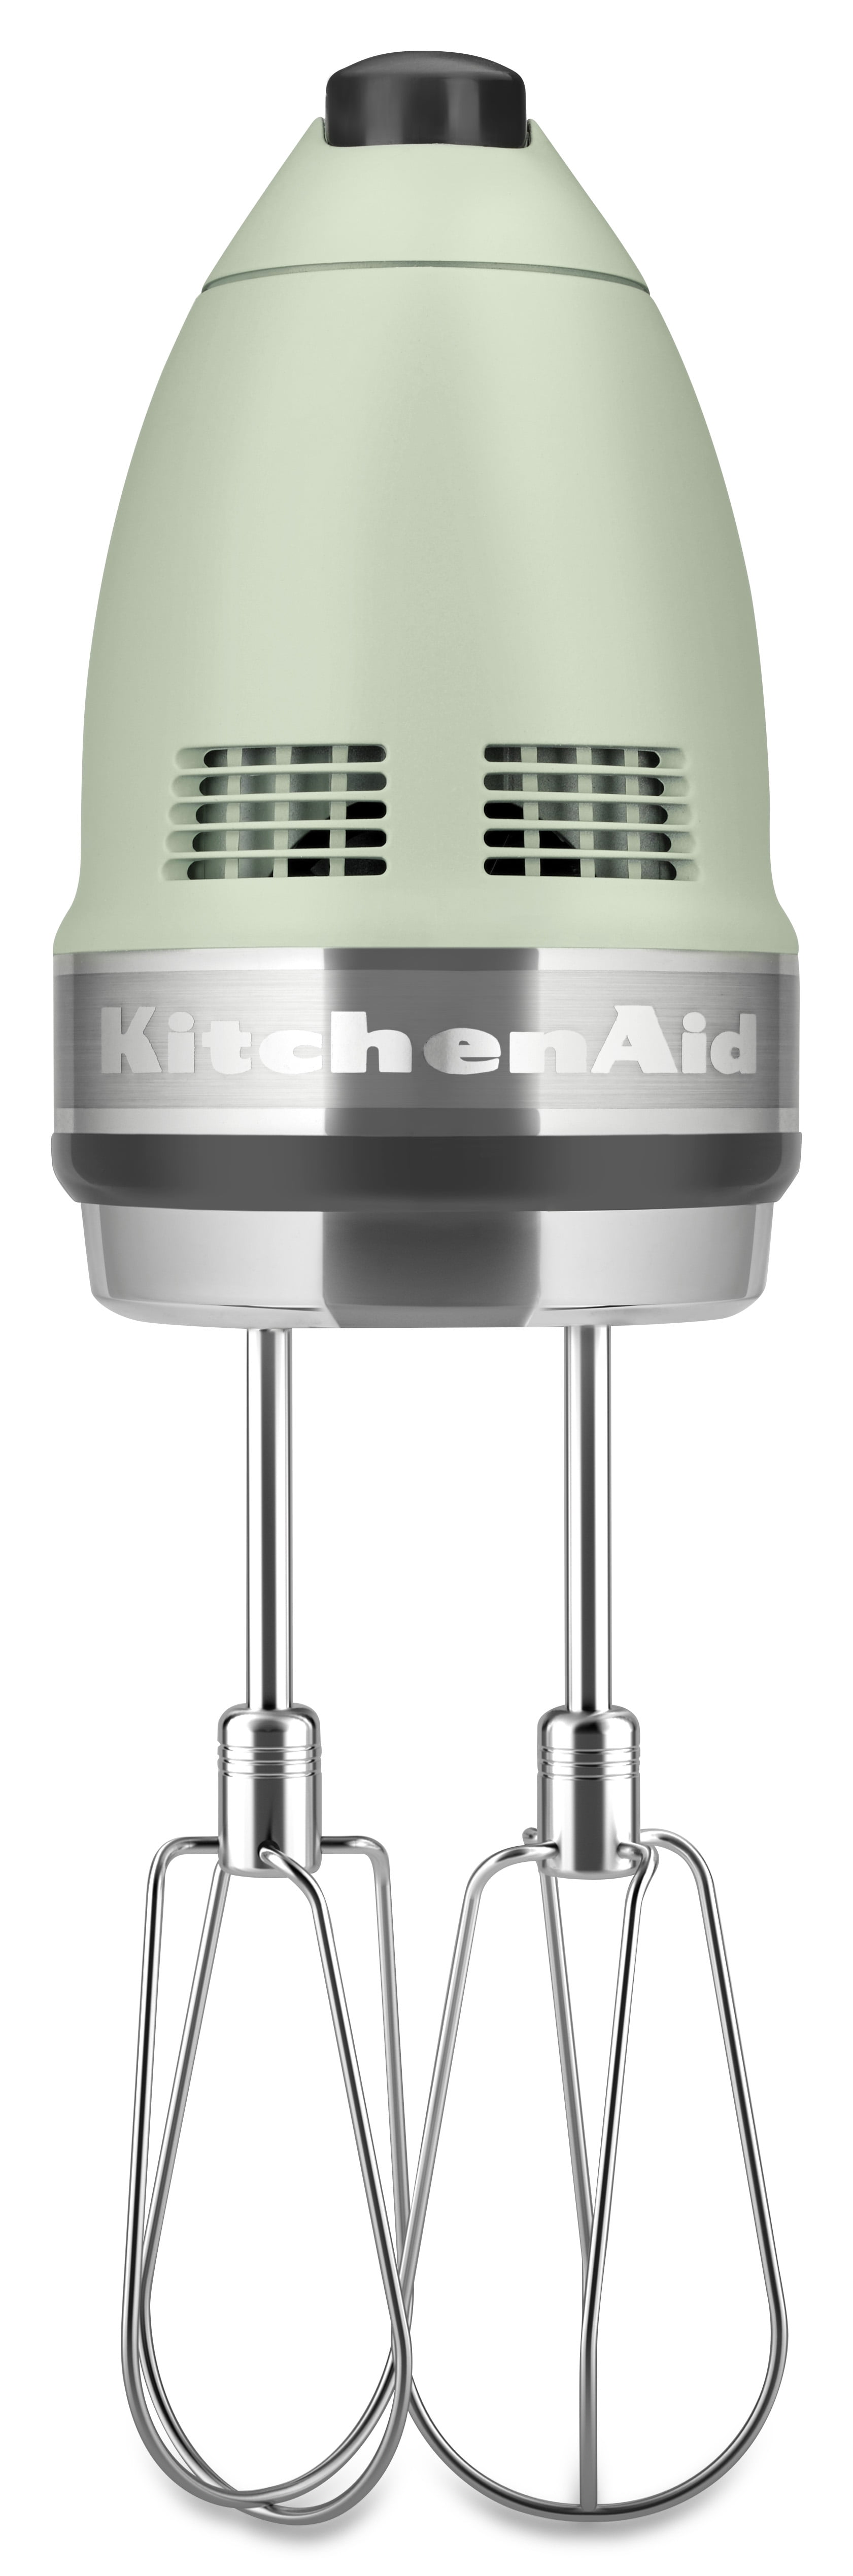 KitchenAid KHM7210QG 7-Speed Digital Hand Mixer with Turbo Beater